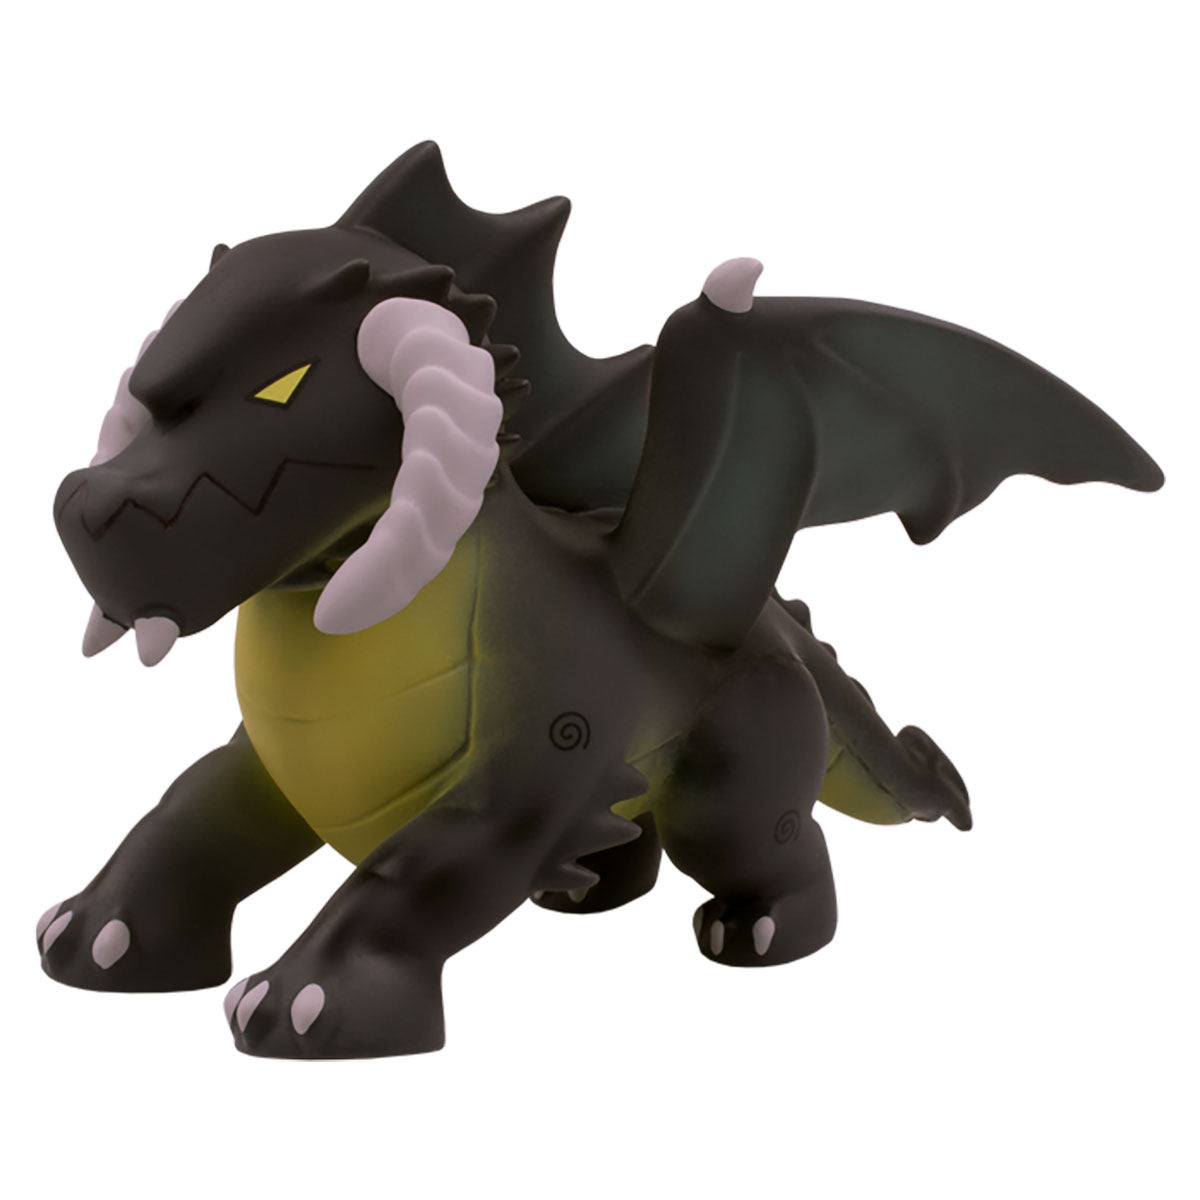 Black Dragon - D&D Figurines of Adorable Power